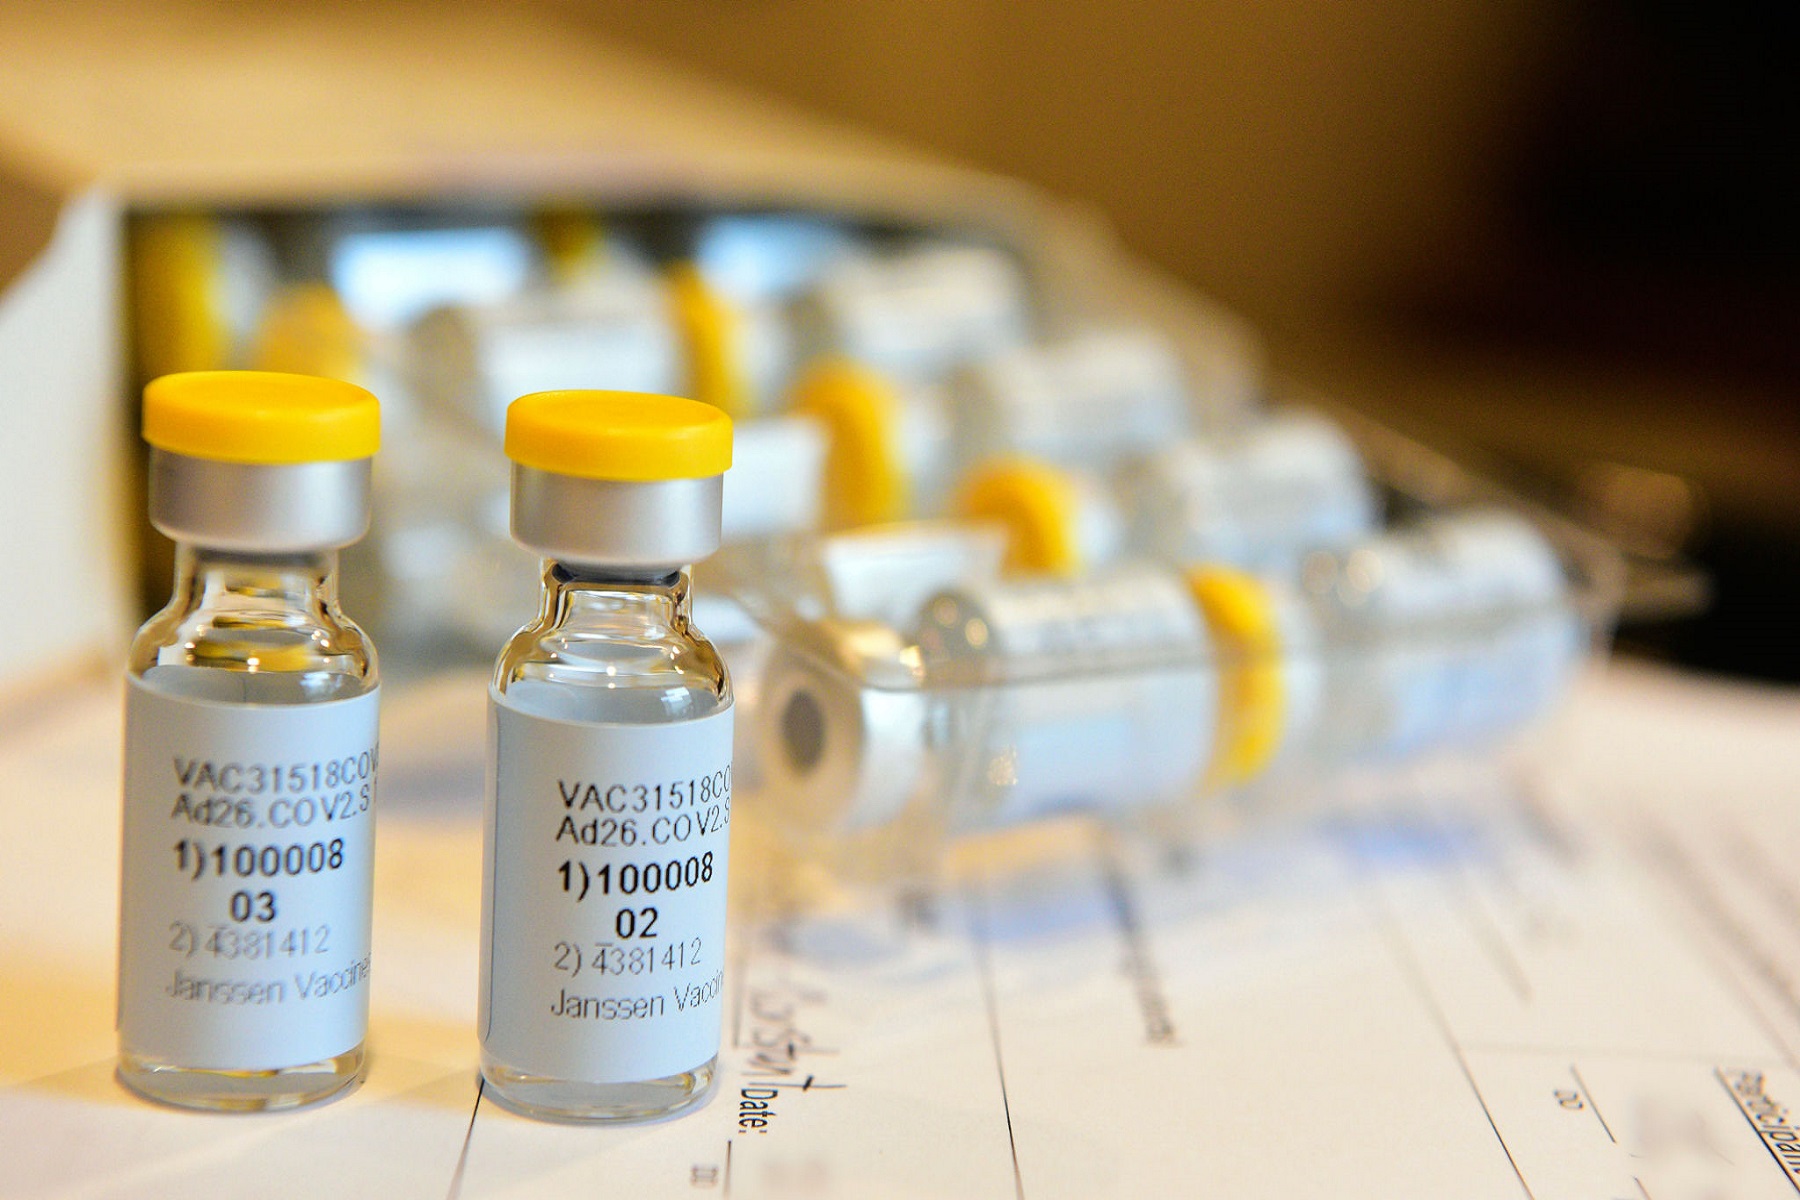 Covid Γαλλία: Πέτυχε το ορόσημο των 20 εκατομμυρίων στην προσπάθεια εμβολιασμού